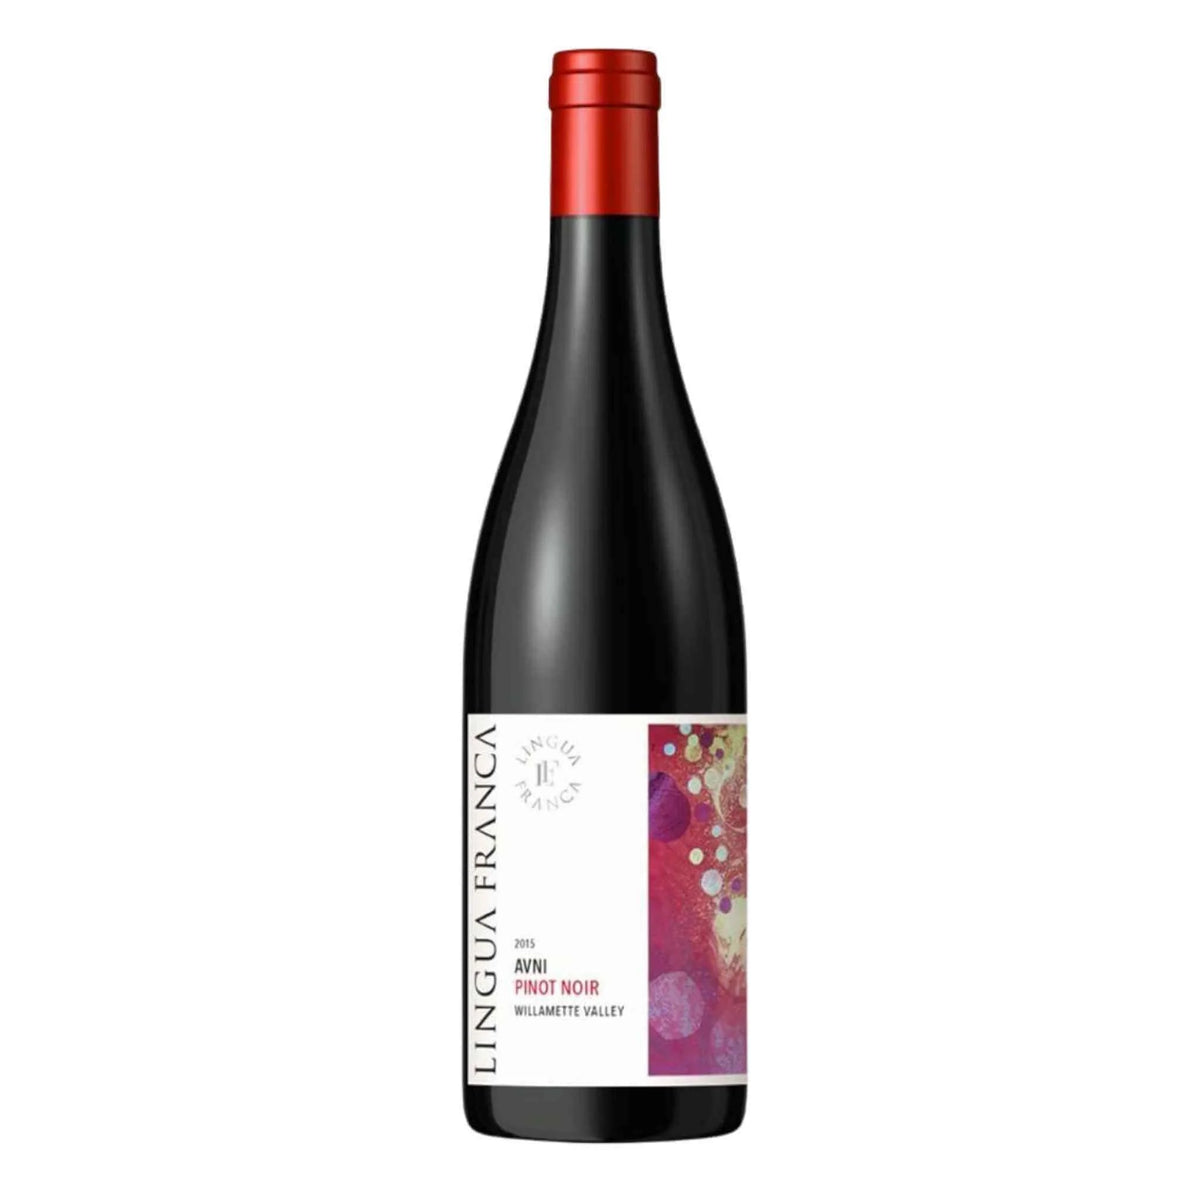 Lingua Franca-Rotwein-Pinot Noir-2019 AVNI Pinot Noir-WINECOM